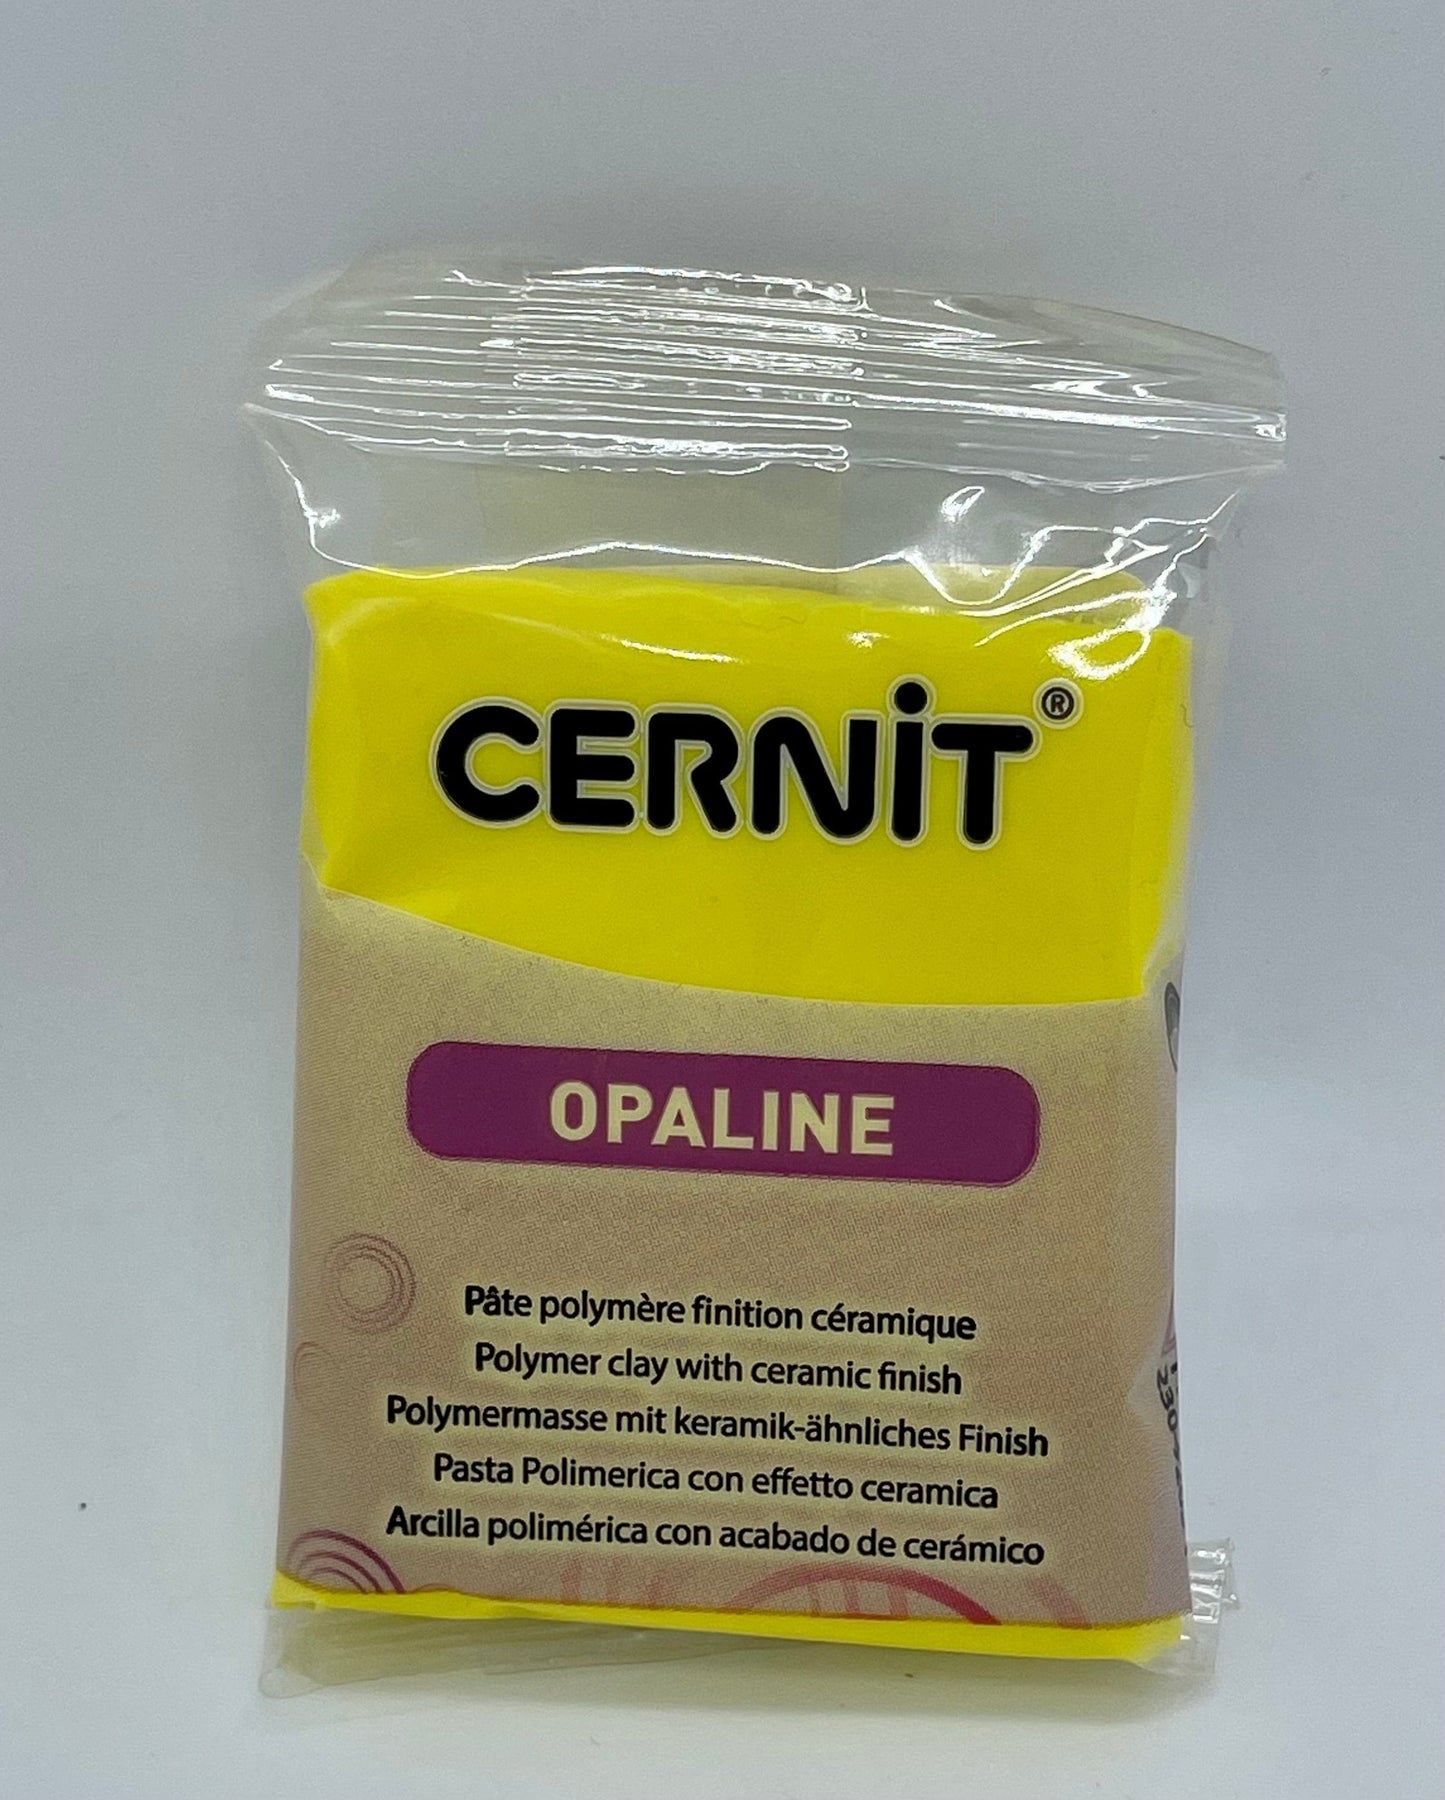 Cernit Opaline polymer clay